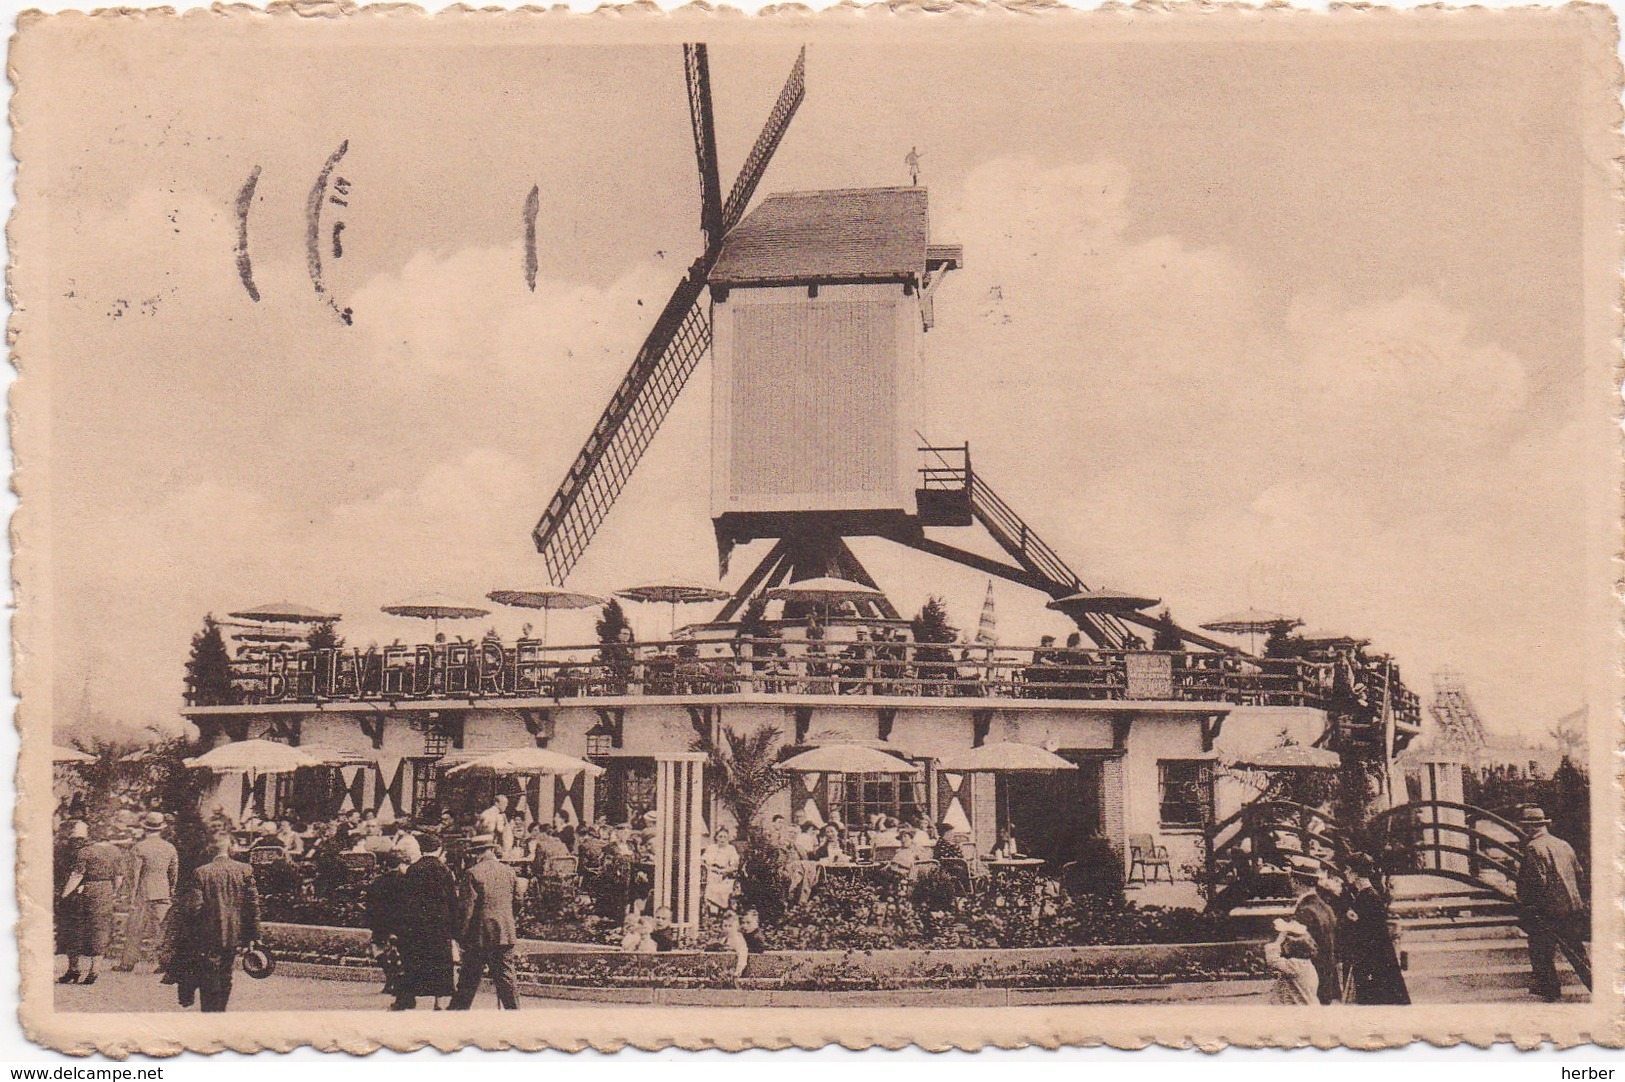 ANTWERPEN-STRAND - ANVERS-PLAGE - 1948 - De Molen Le Moulin - Antwerpen Strand - Anvers Plage - Antwerpen